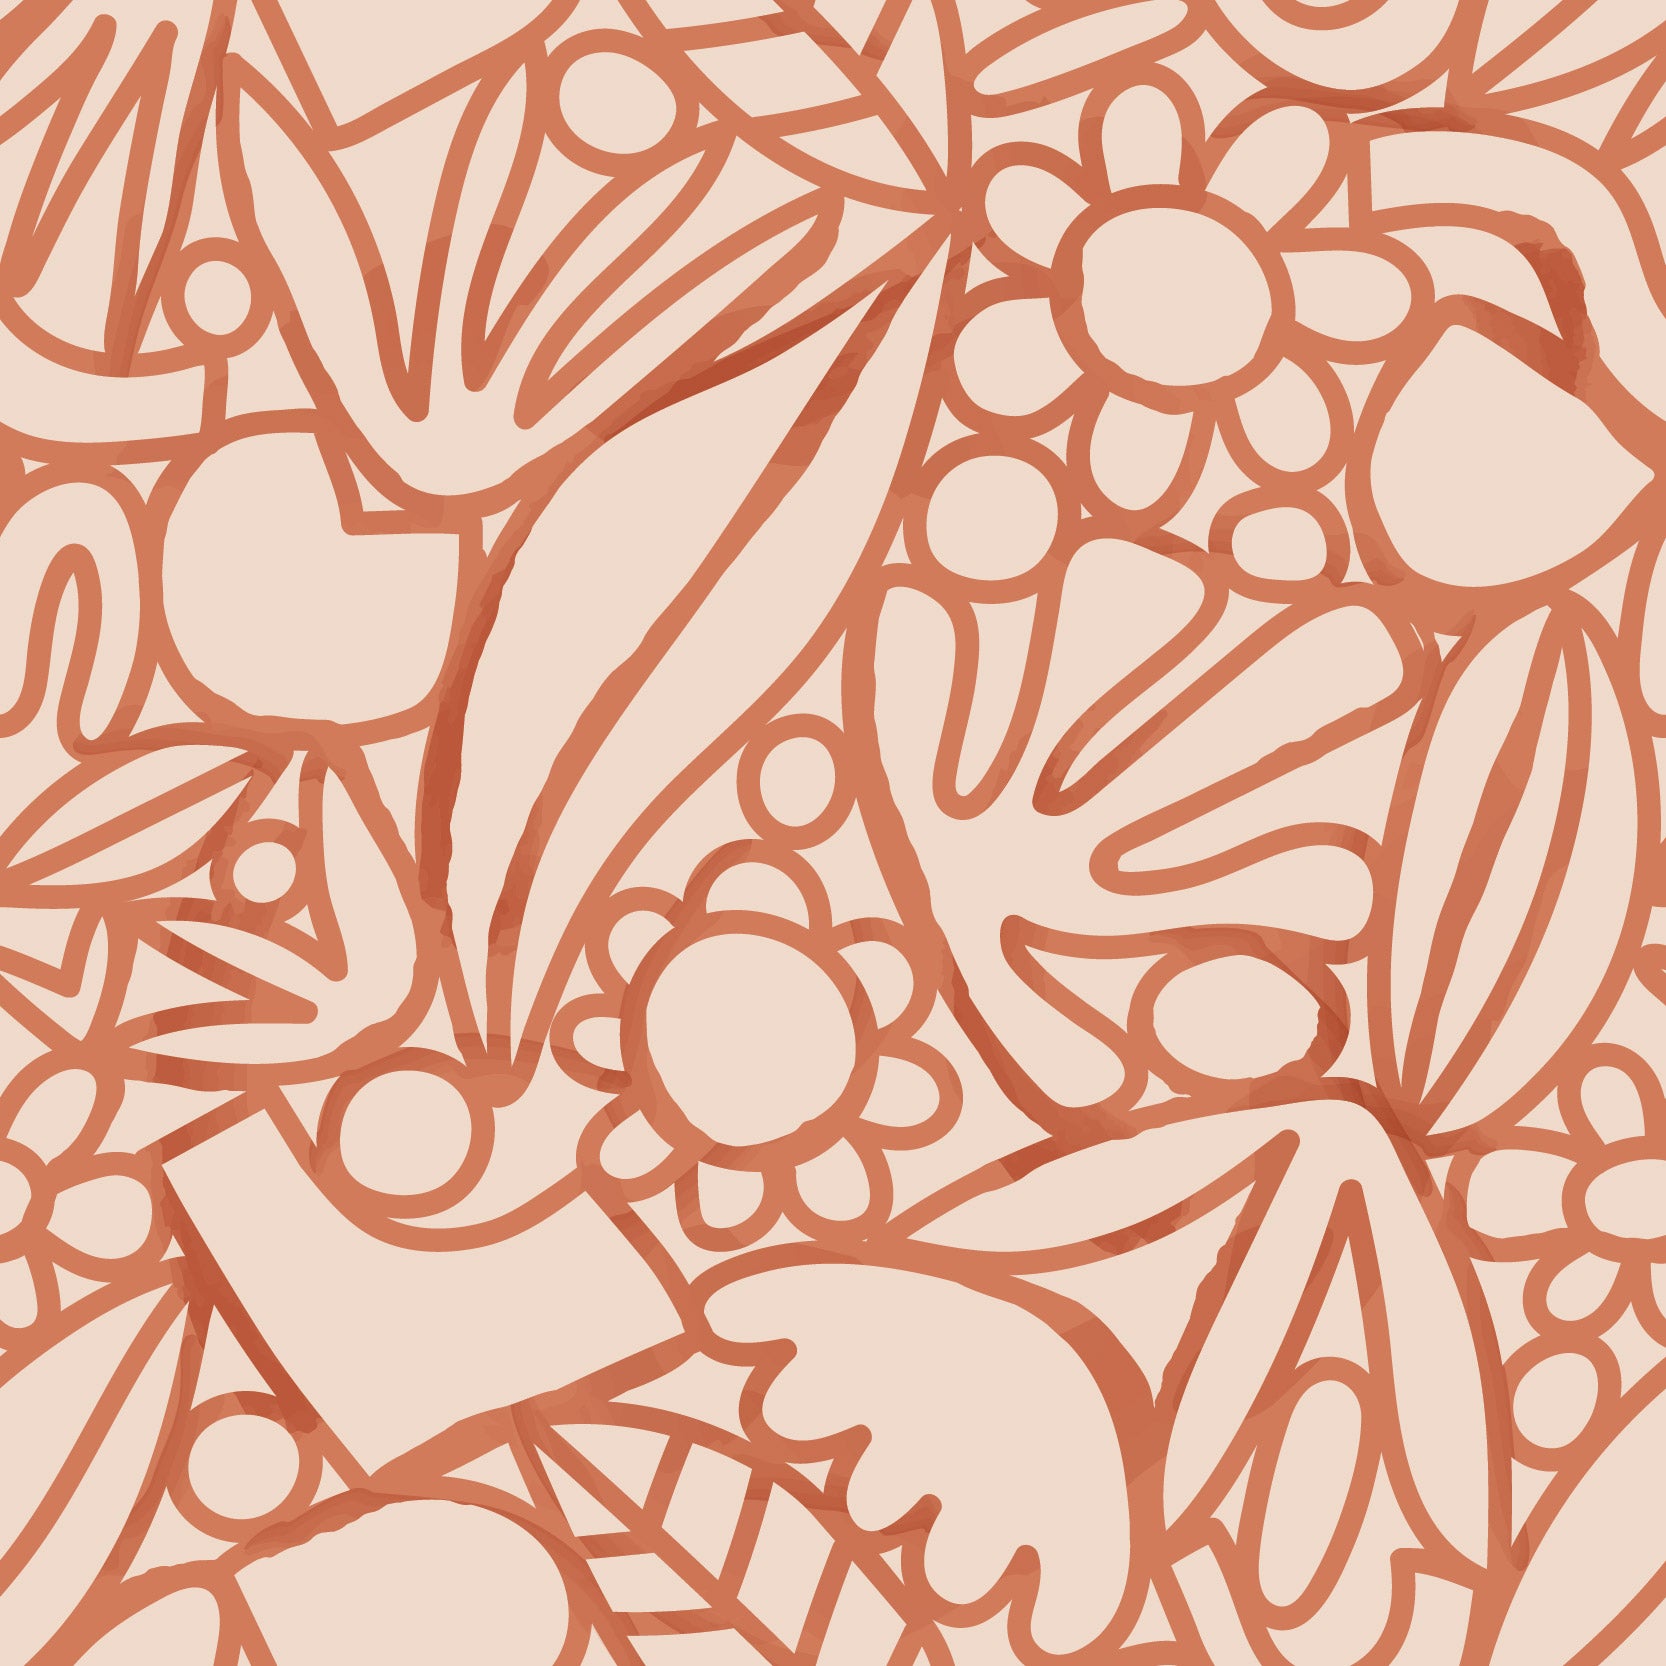 Freya - Orange Floral Doodle Wallpaper Mural